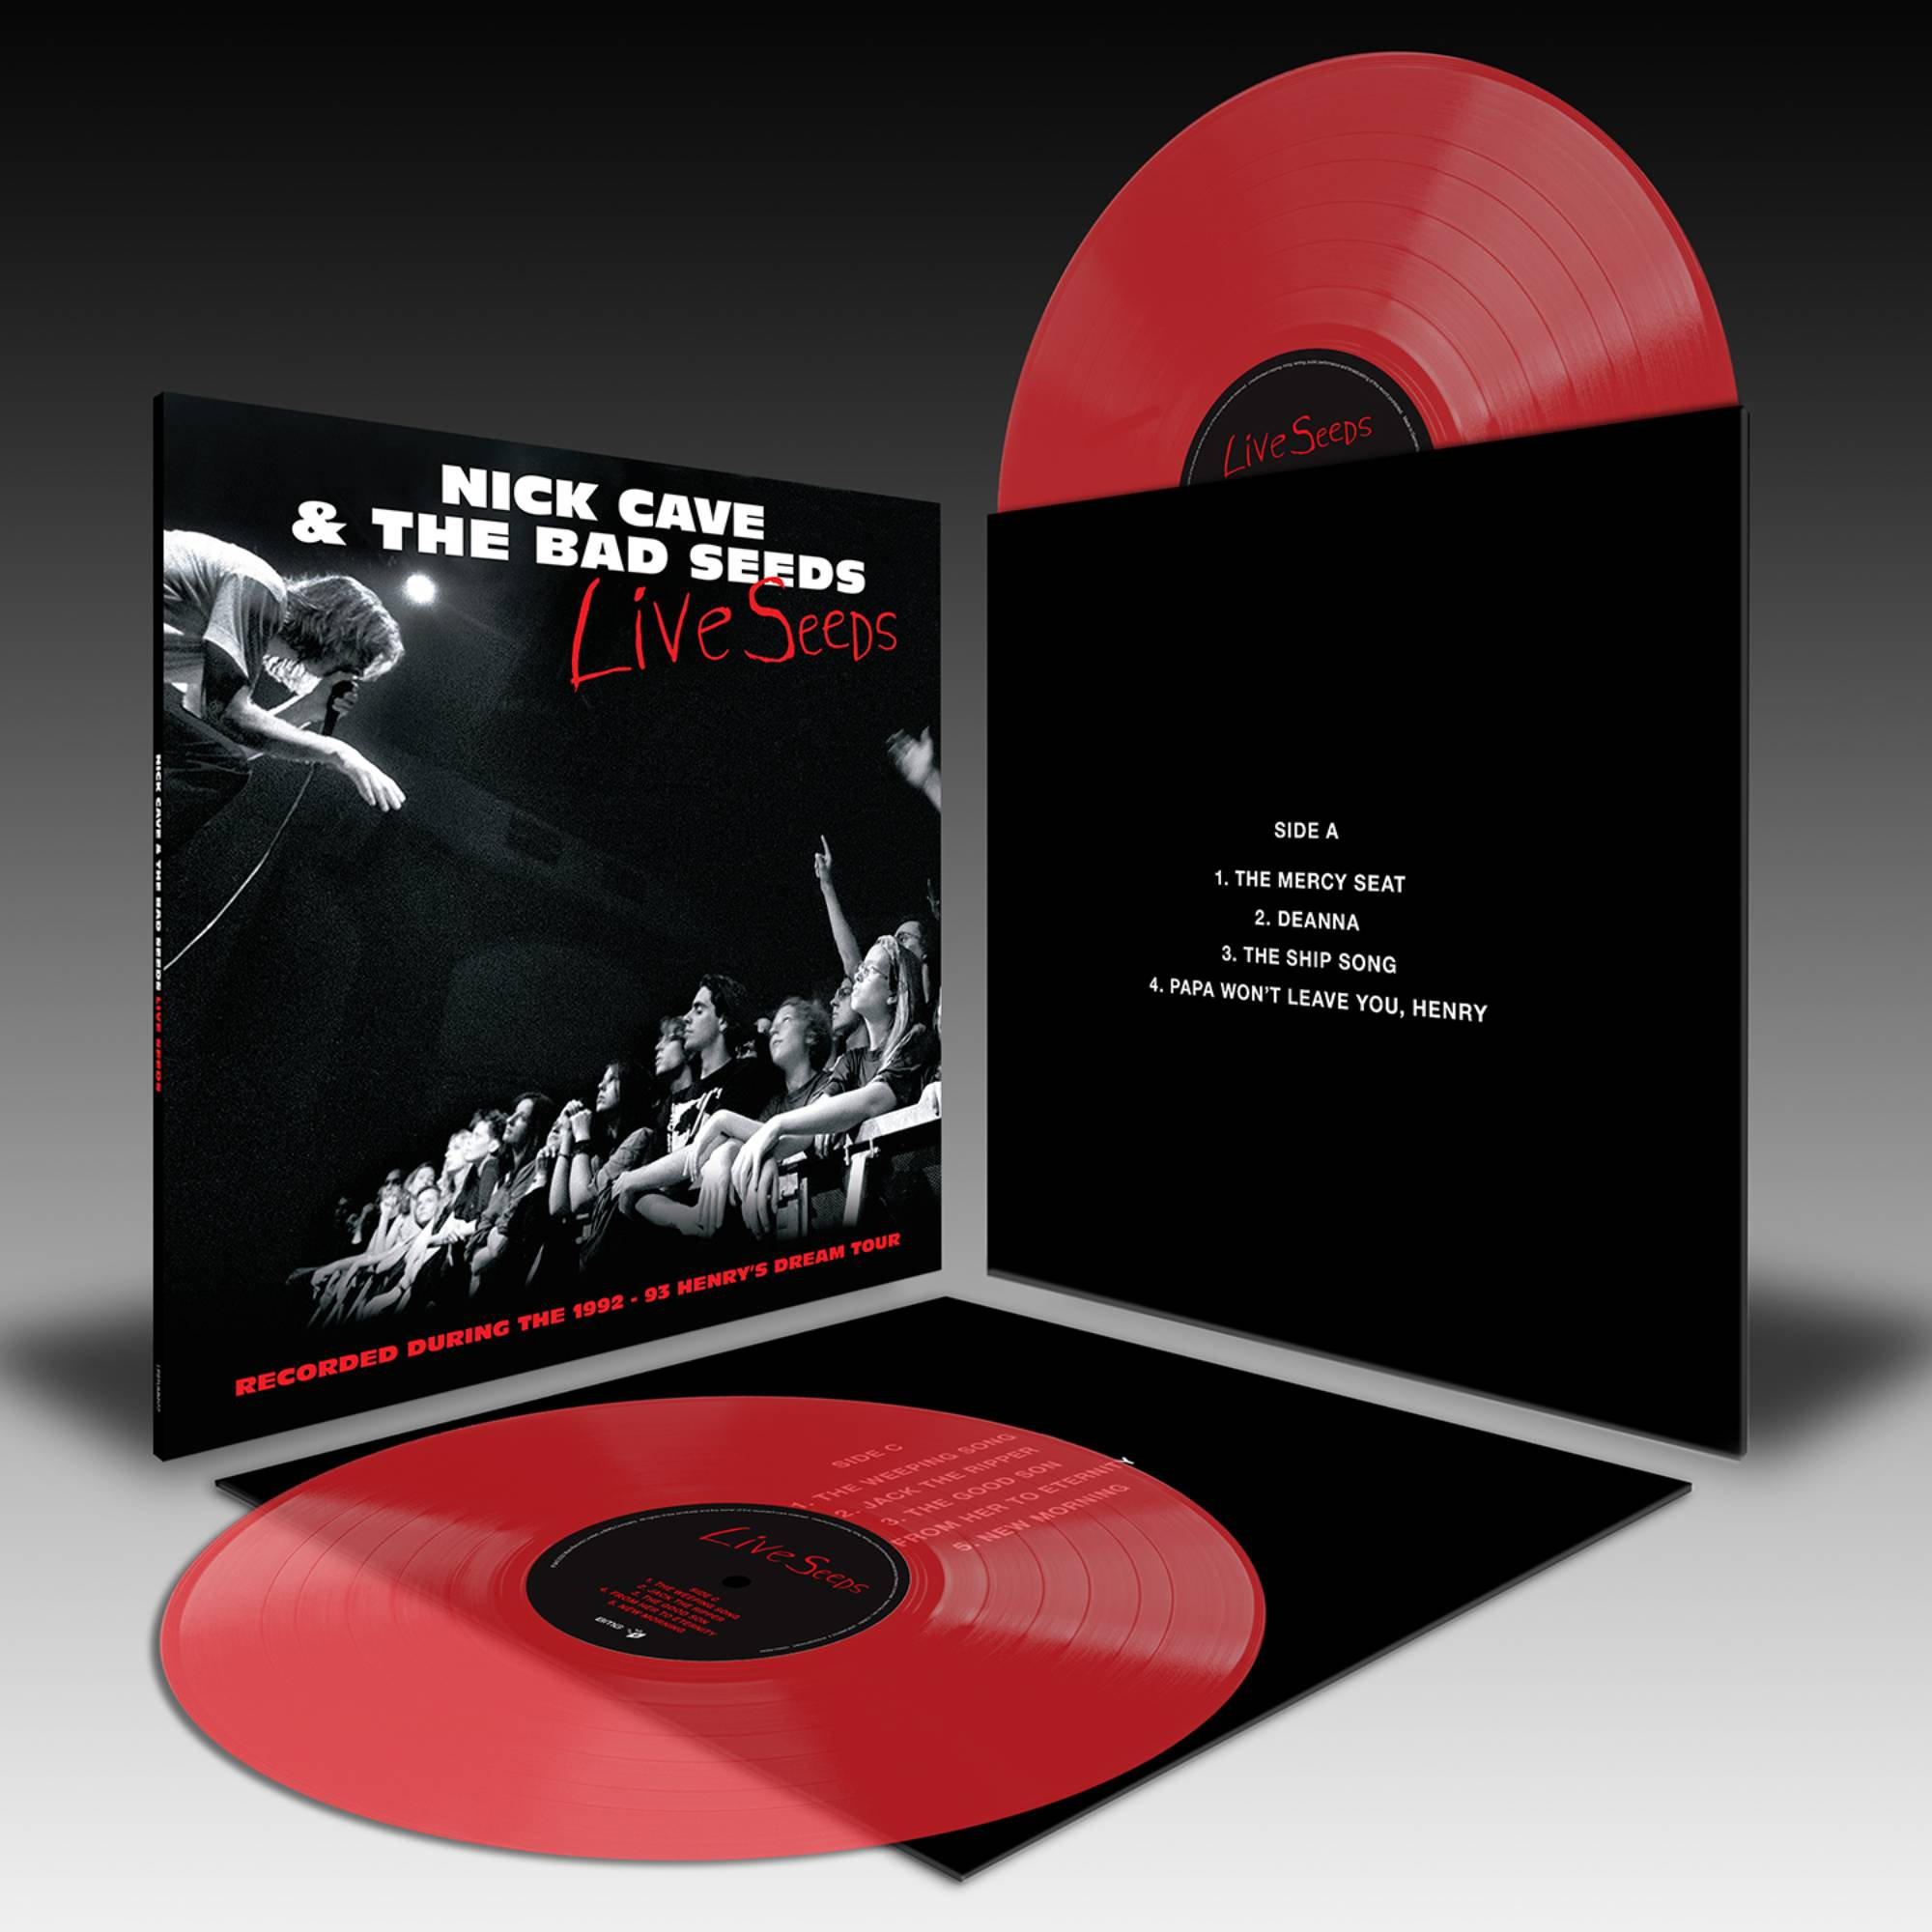 Nick Cave & The Bad Seeds "Live Seeds" 2LP